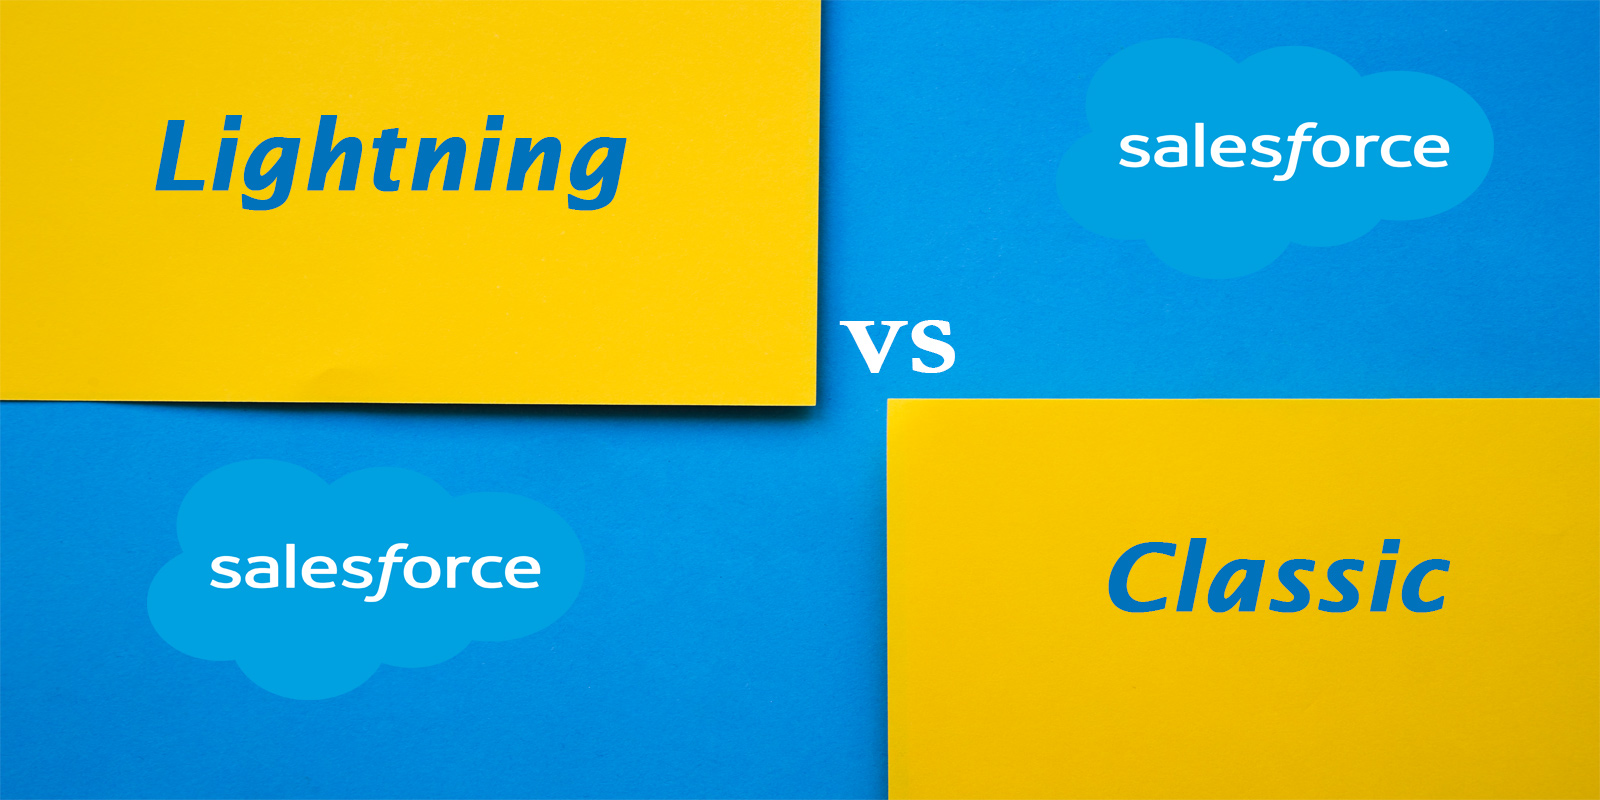 Salesforce Lightning vs Classic